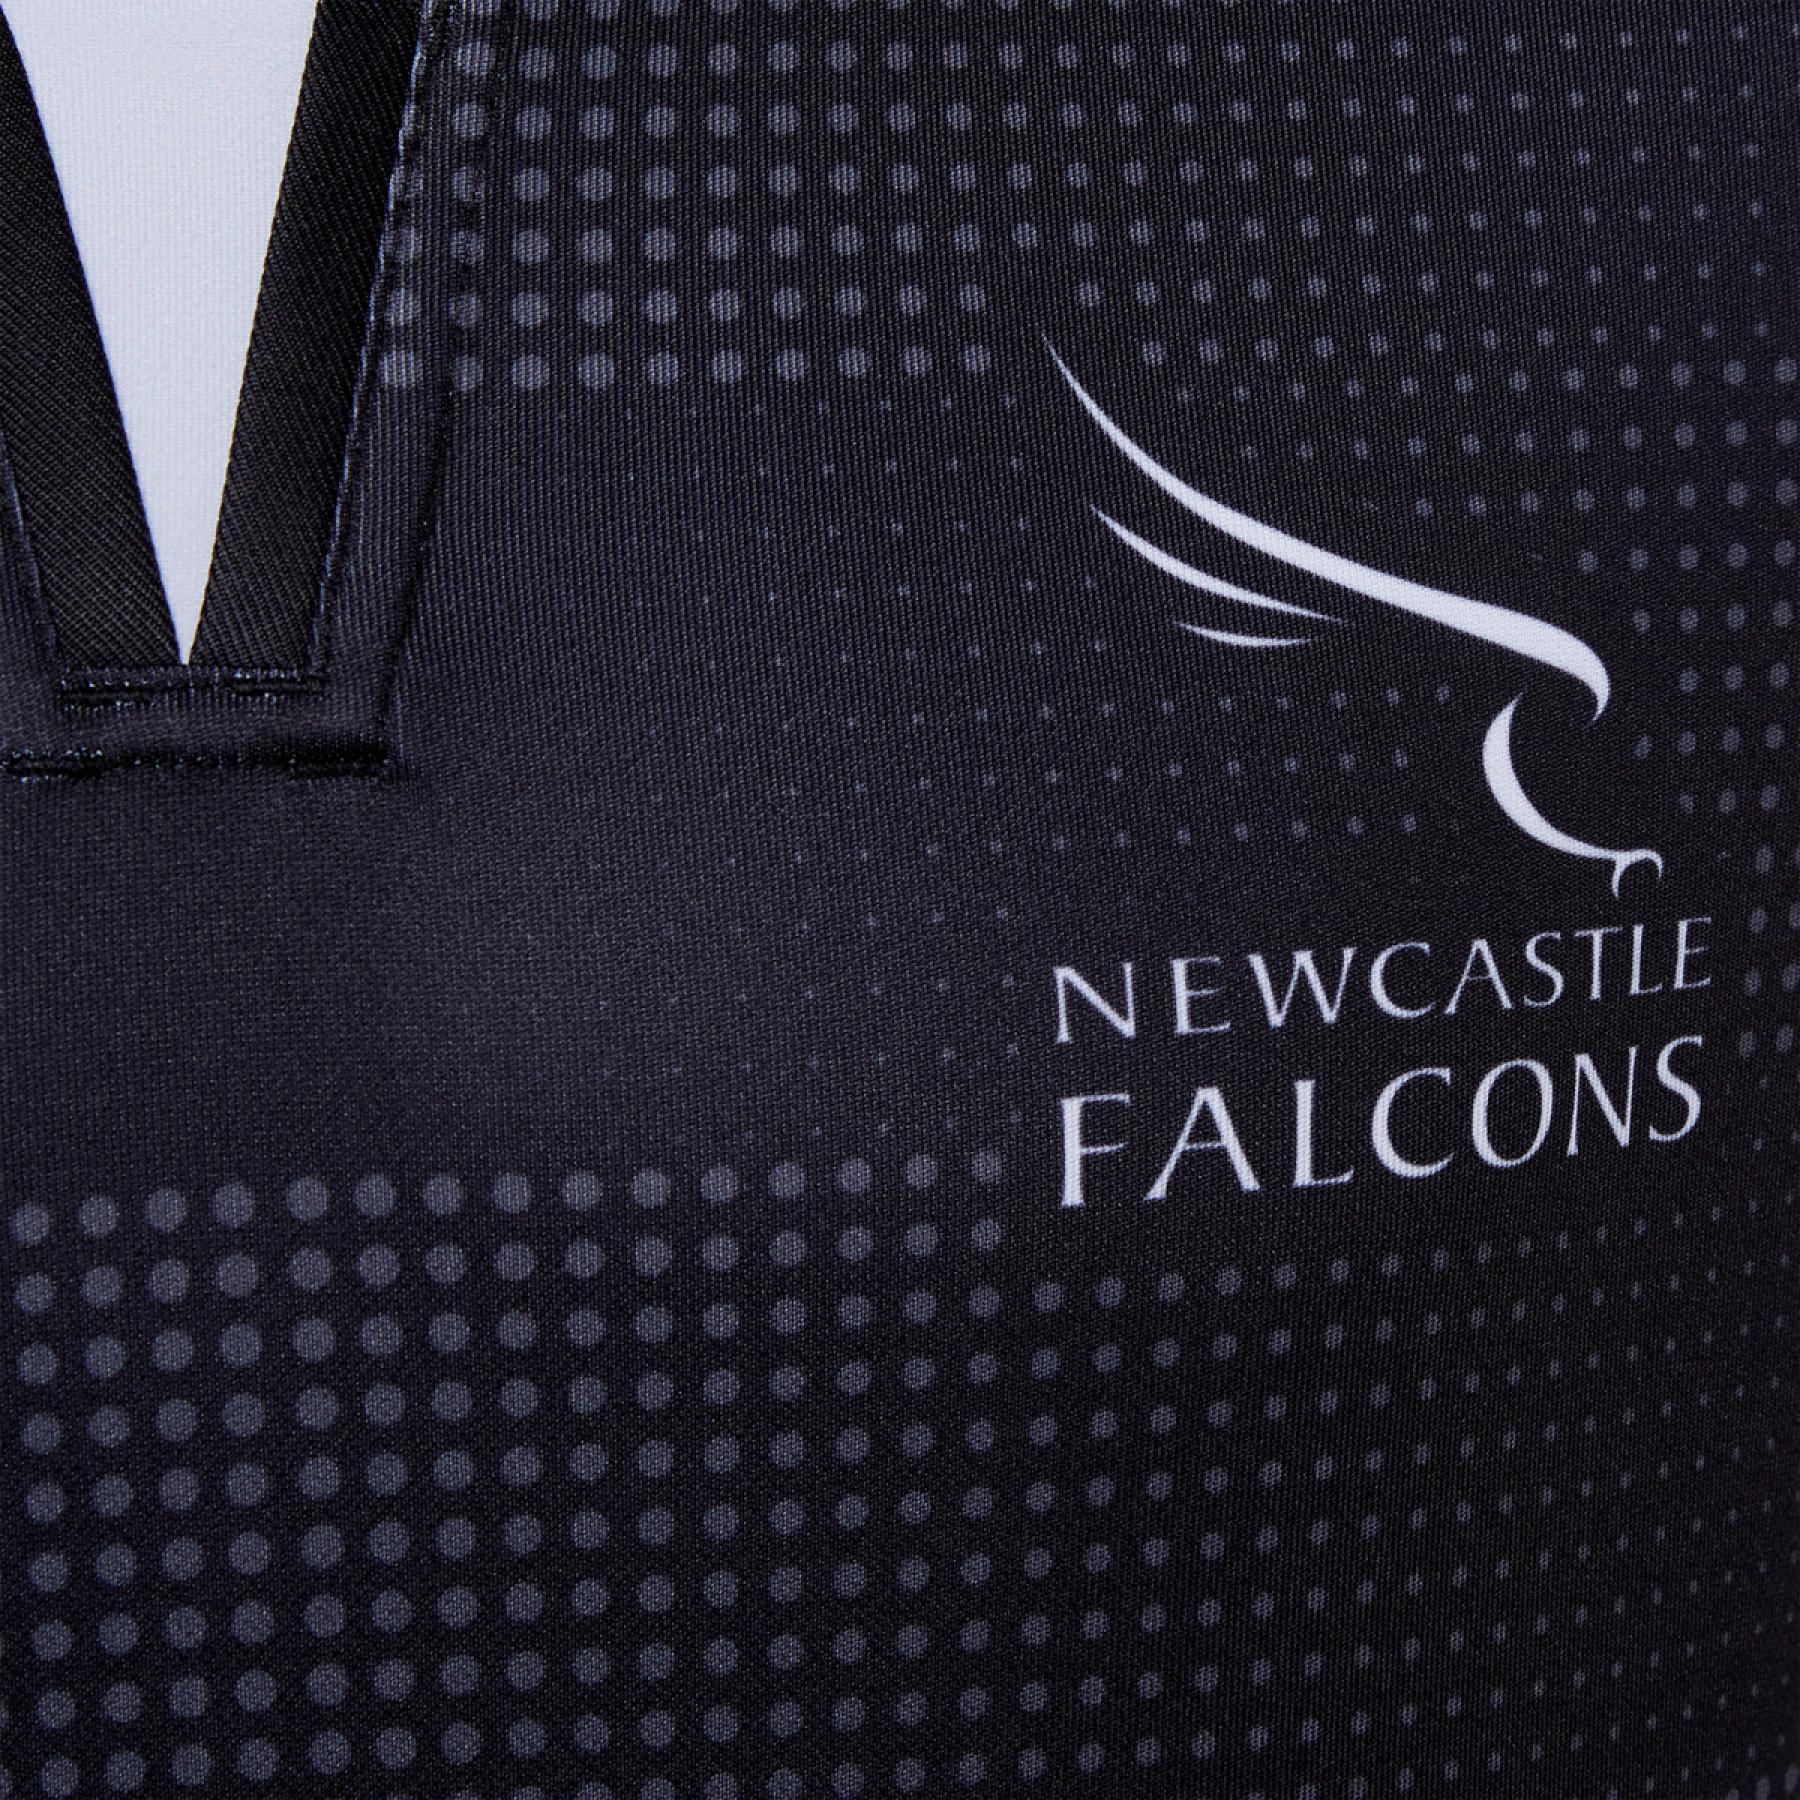 Koszulka domowa Newcastle falcons 2020/21